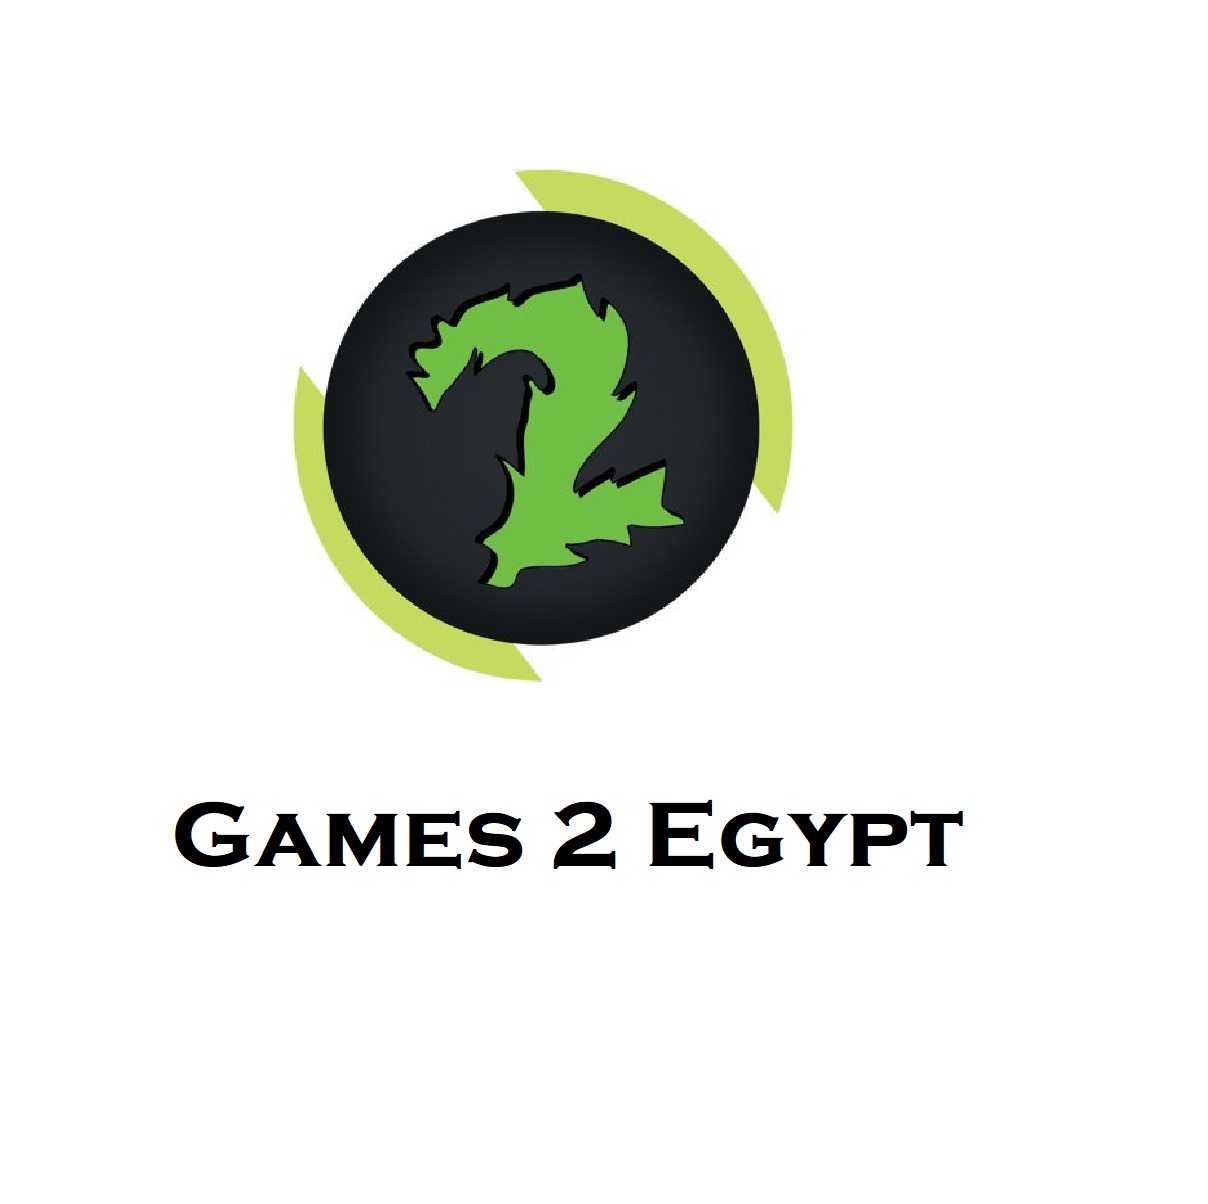 Games 2 Egypt